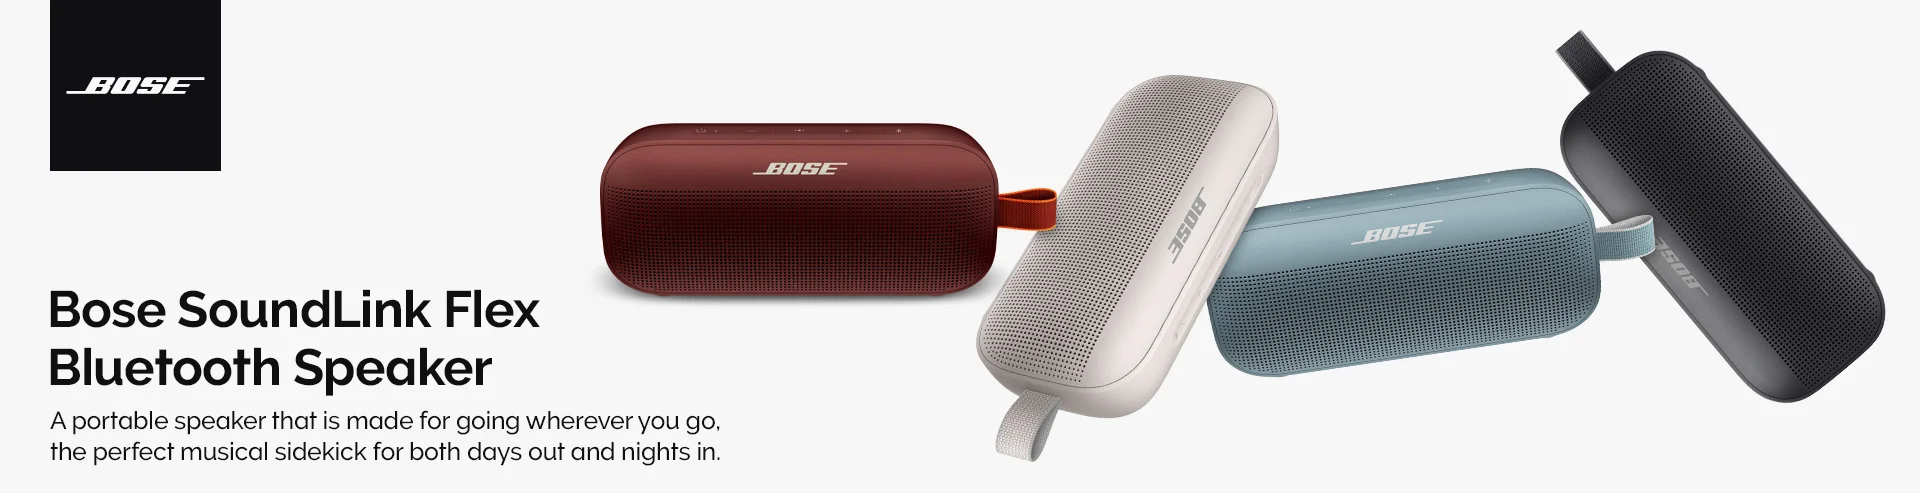 VM-Hero-Bose-SoundLink-Flex-Bluetooth-Speakers-1920x493.webp